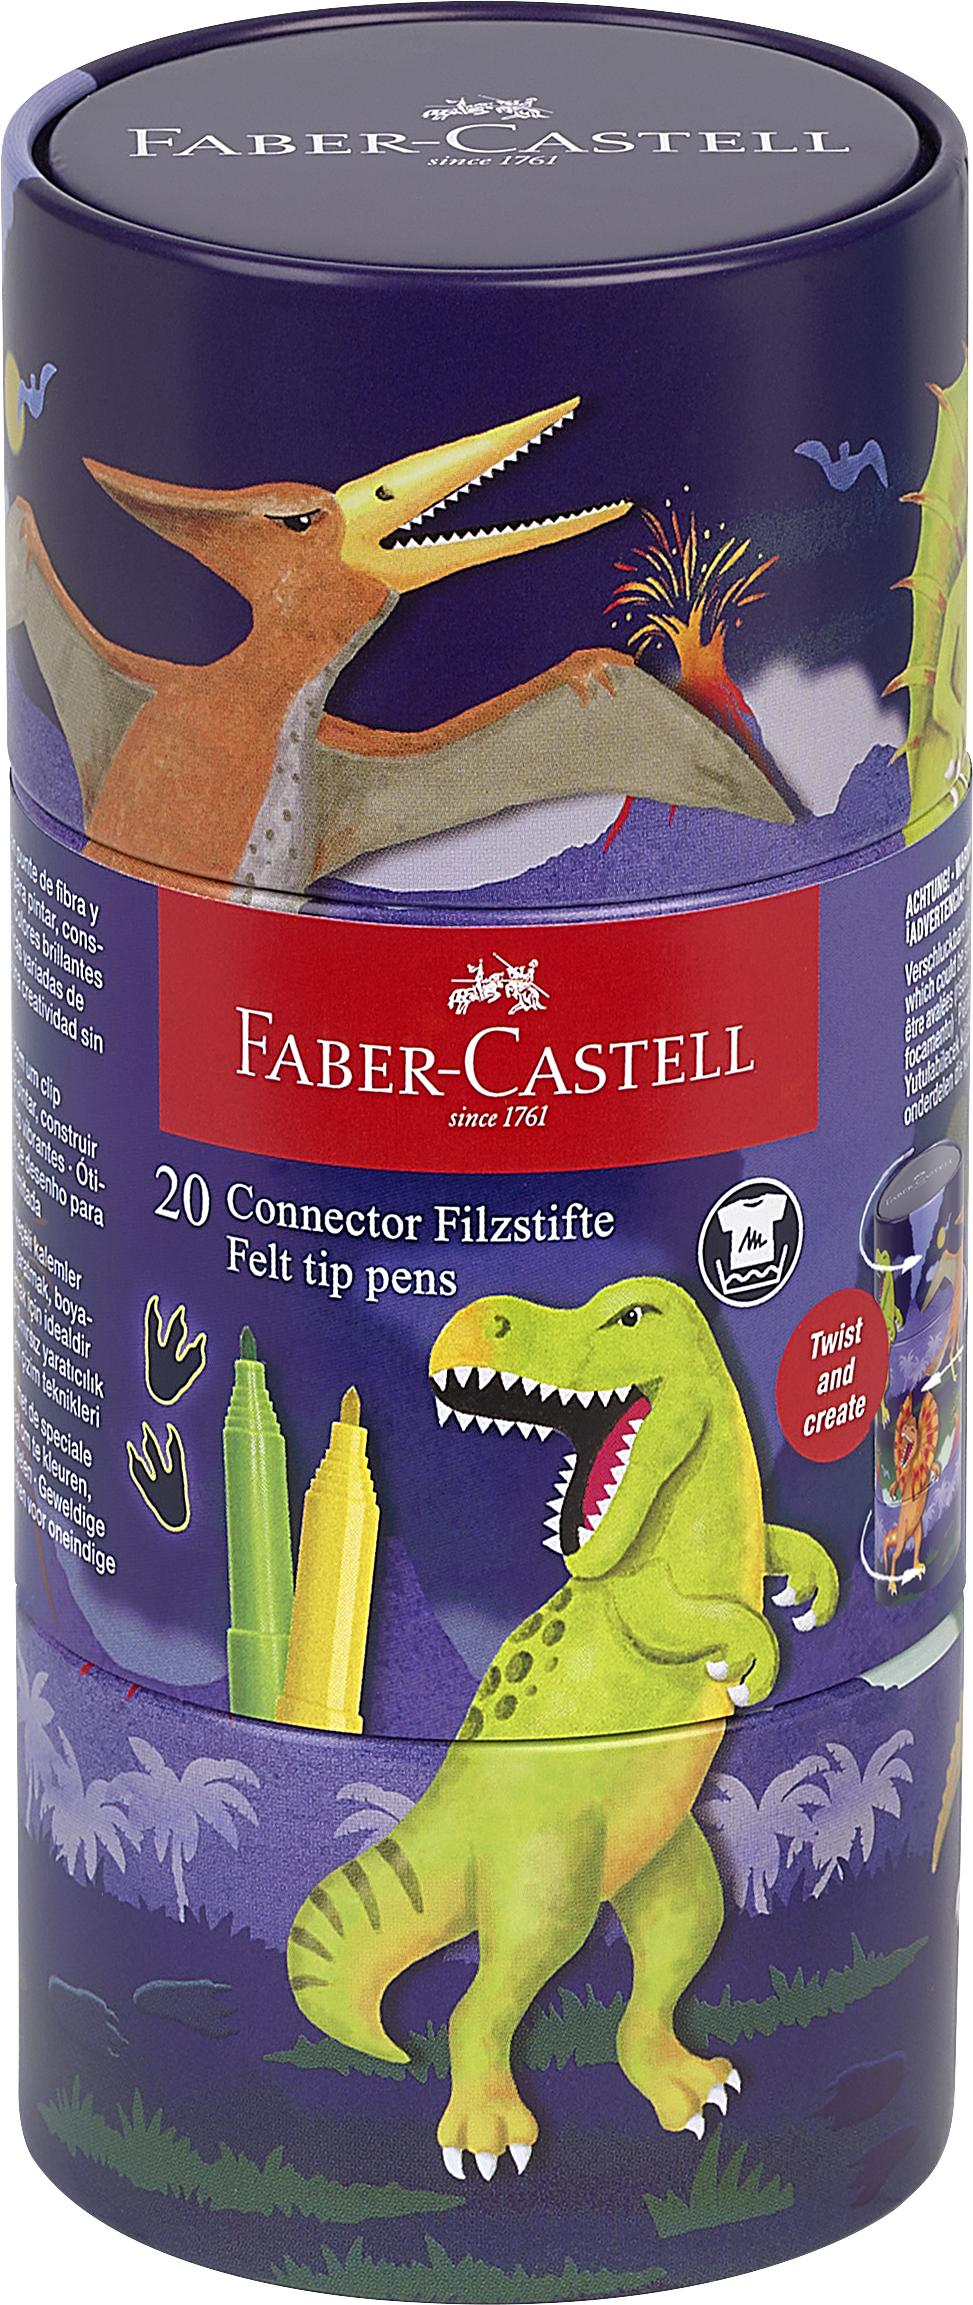 Faber-Castell – Felt-tip pen Connector dinosaur (155546)